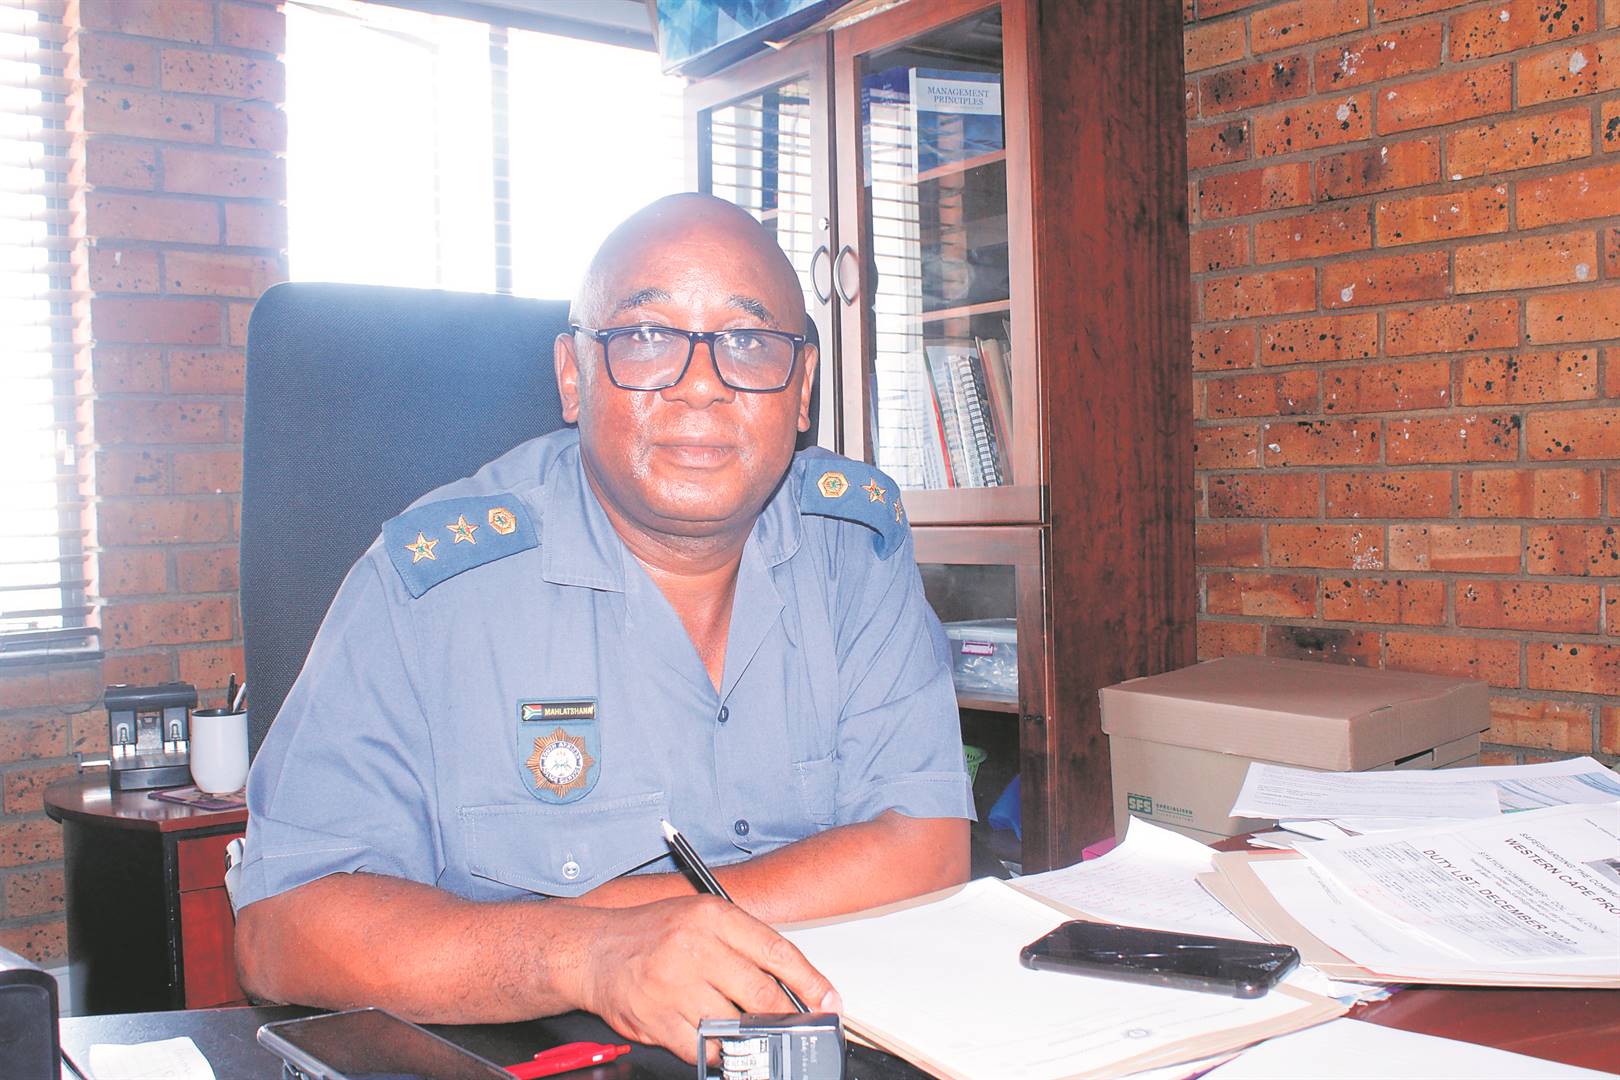 New Harare Police Station Commander Col Thembelani Mahlatshana wants professionalism among members. PHOTO: MZWANELE MKALIPI